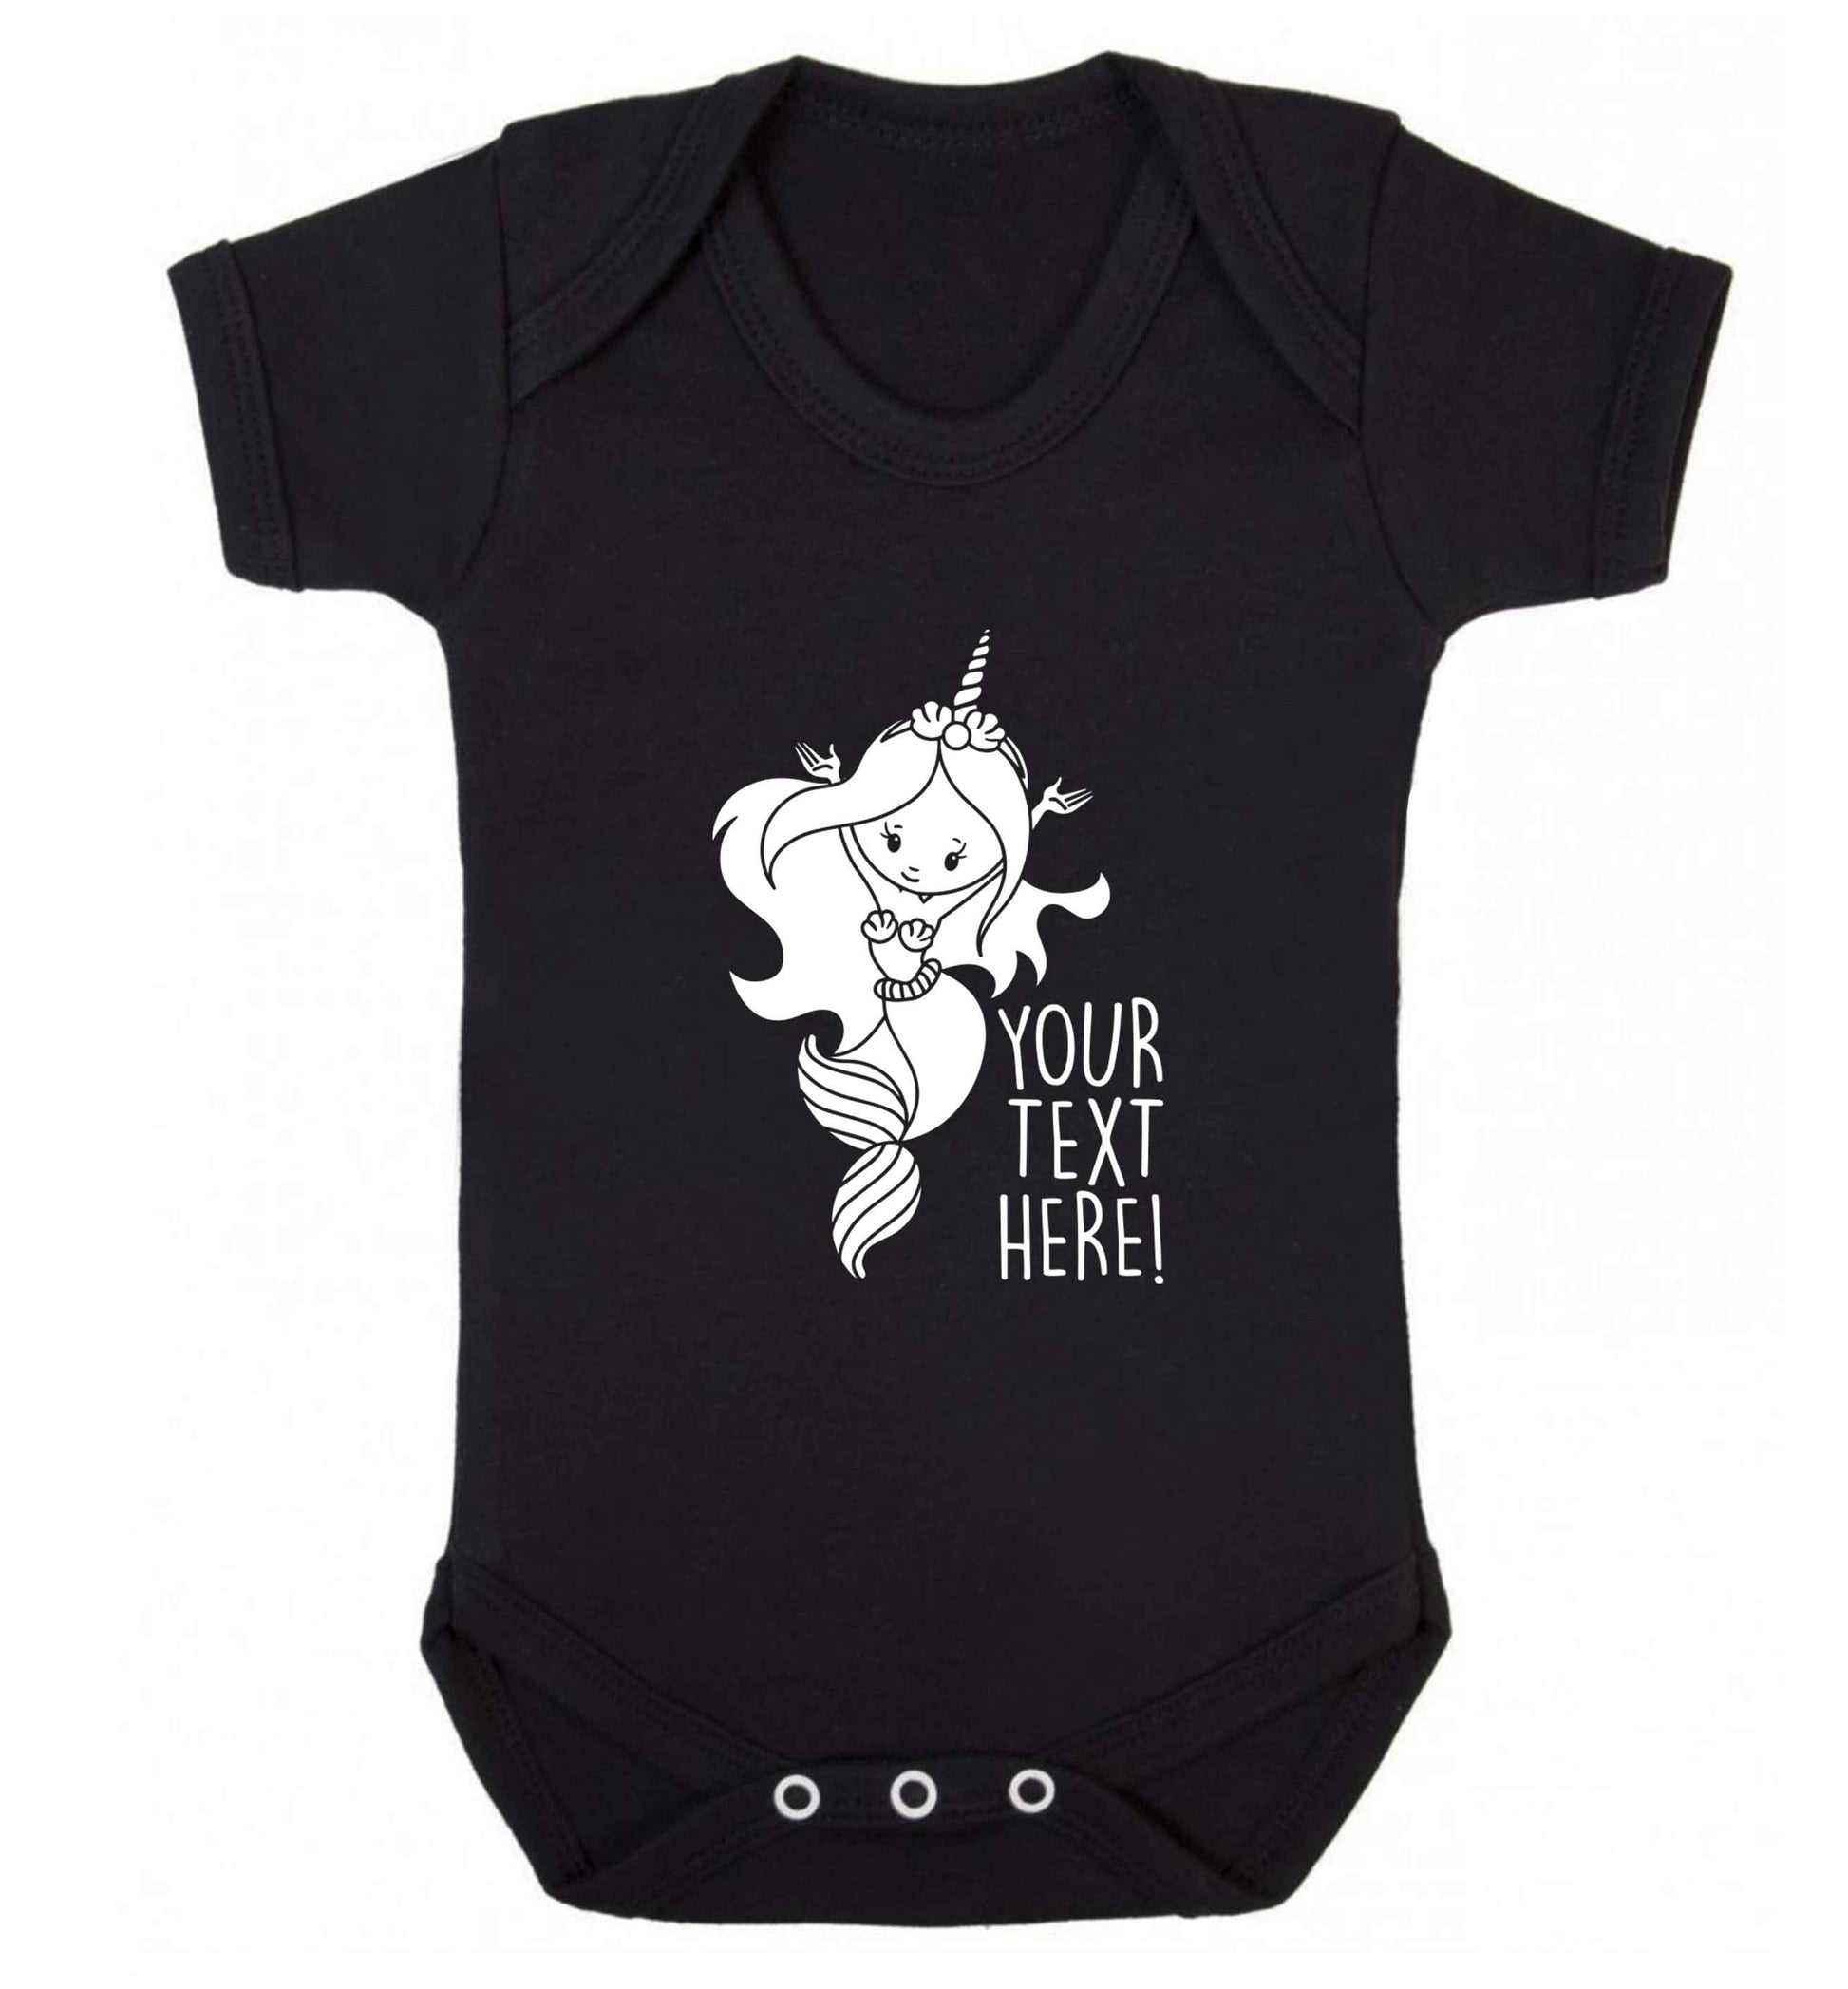 Mermaid with unicorn headband any text baby vest black 18-24 months